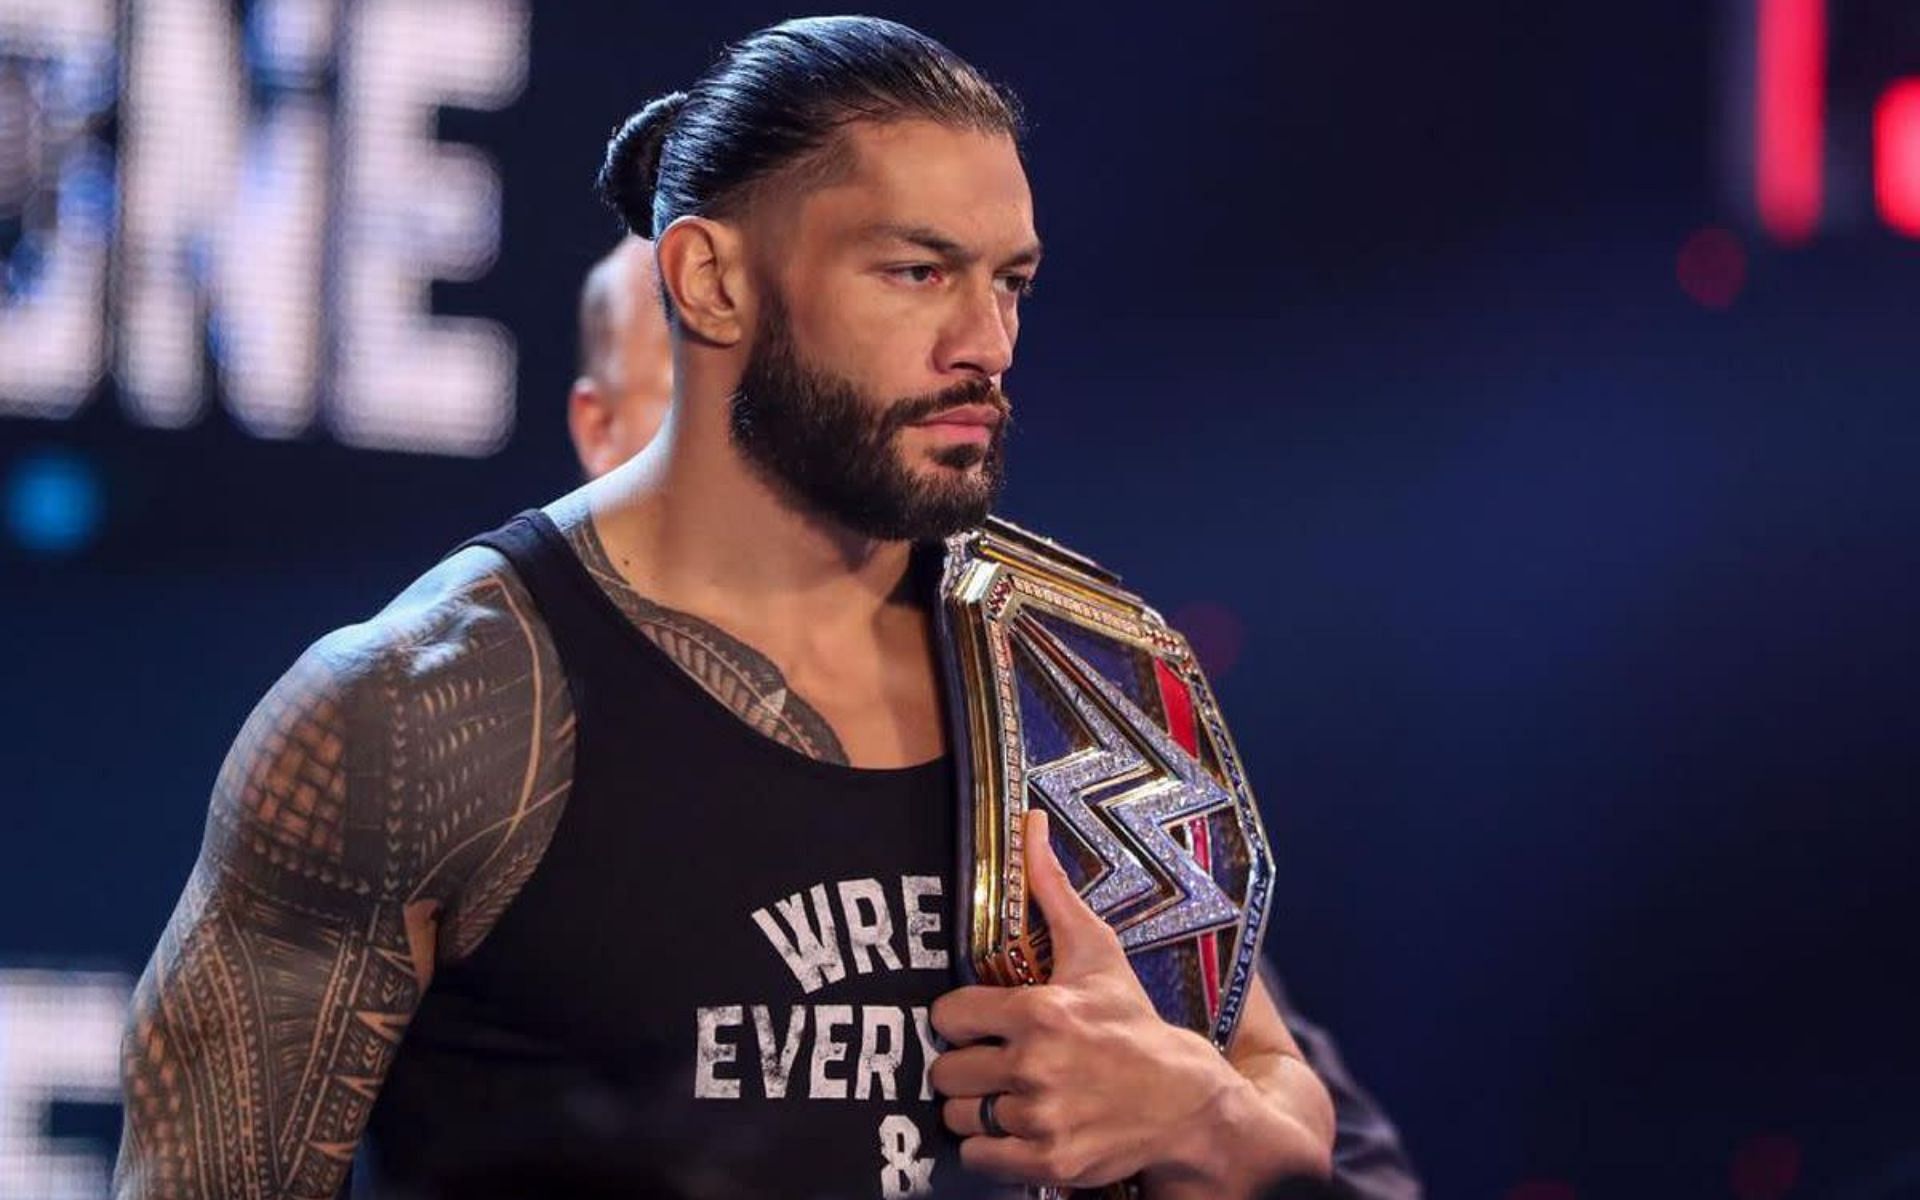 WWE Undisputed Champion, Roman Reigns